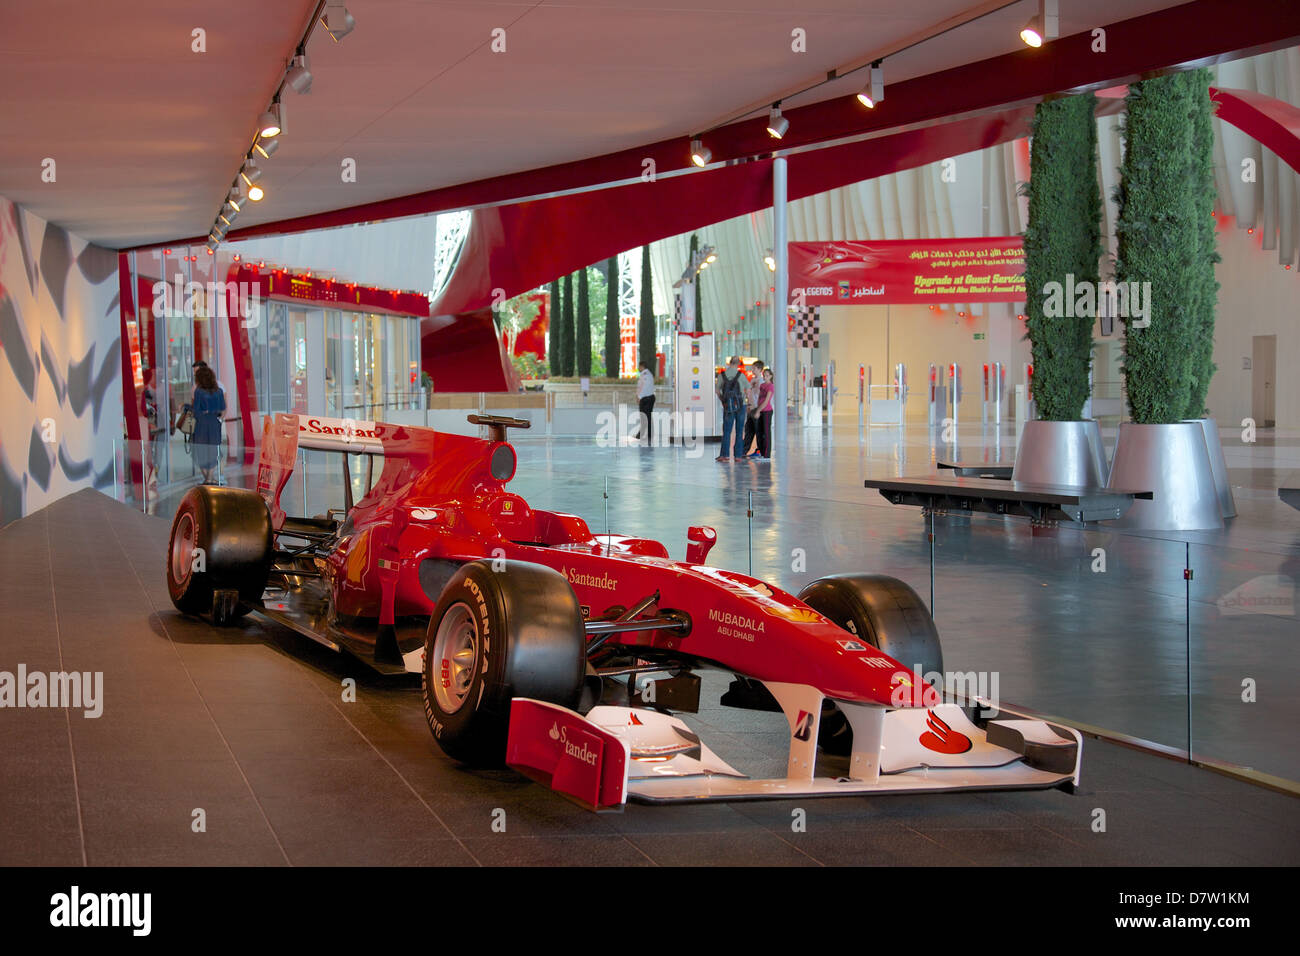 Formula 1 Racing Car, Ferrari World, Yas Island, Abu Dhabi, United Arab Emirates, Middle East Stock Photo